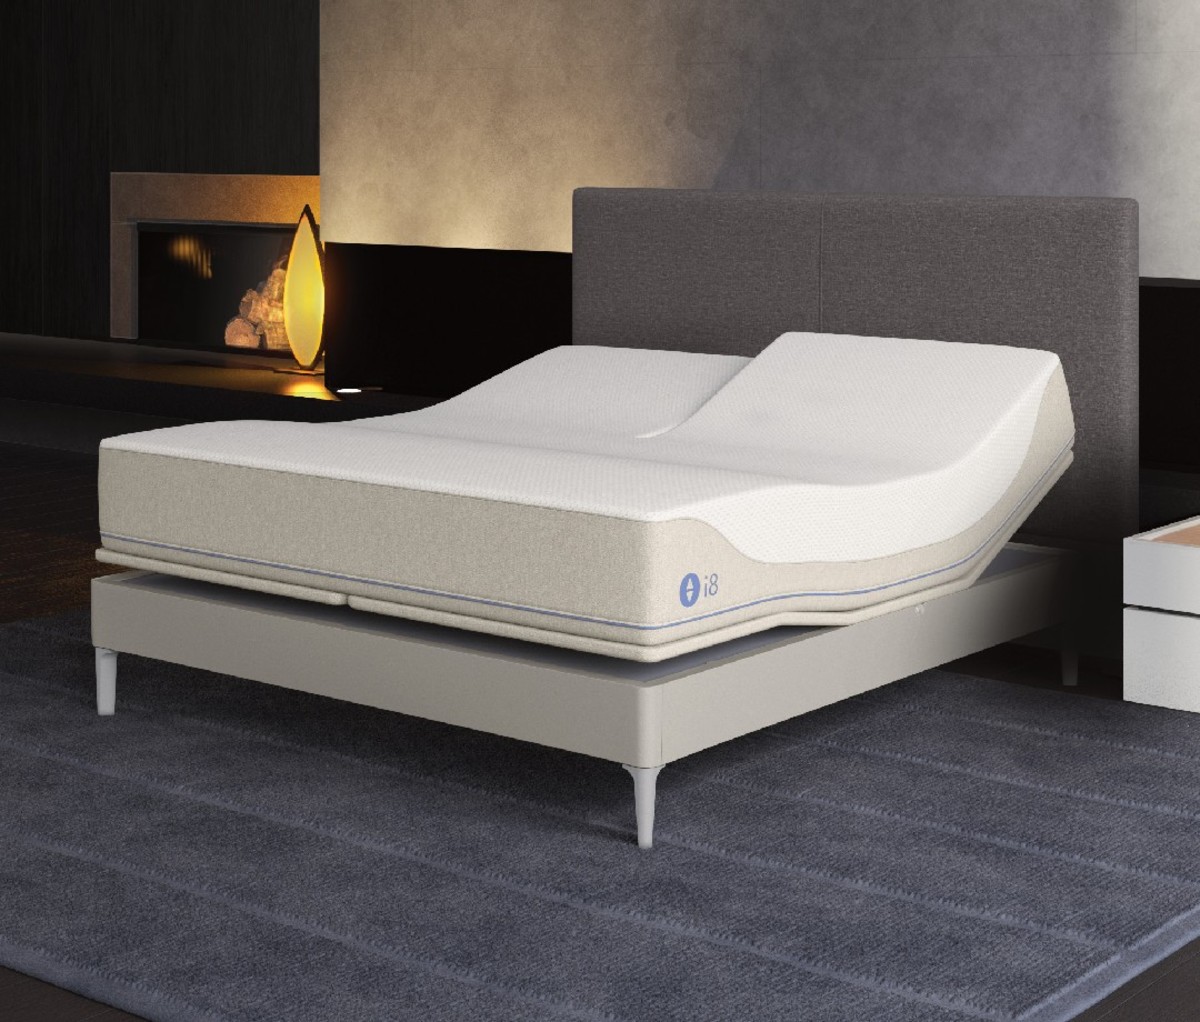 Sleep Number 360 i8 Smart Bed